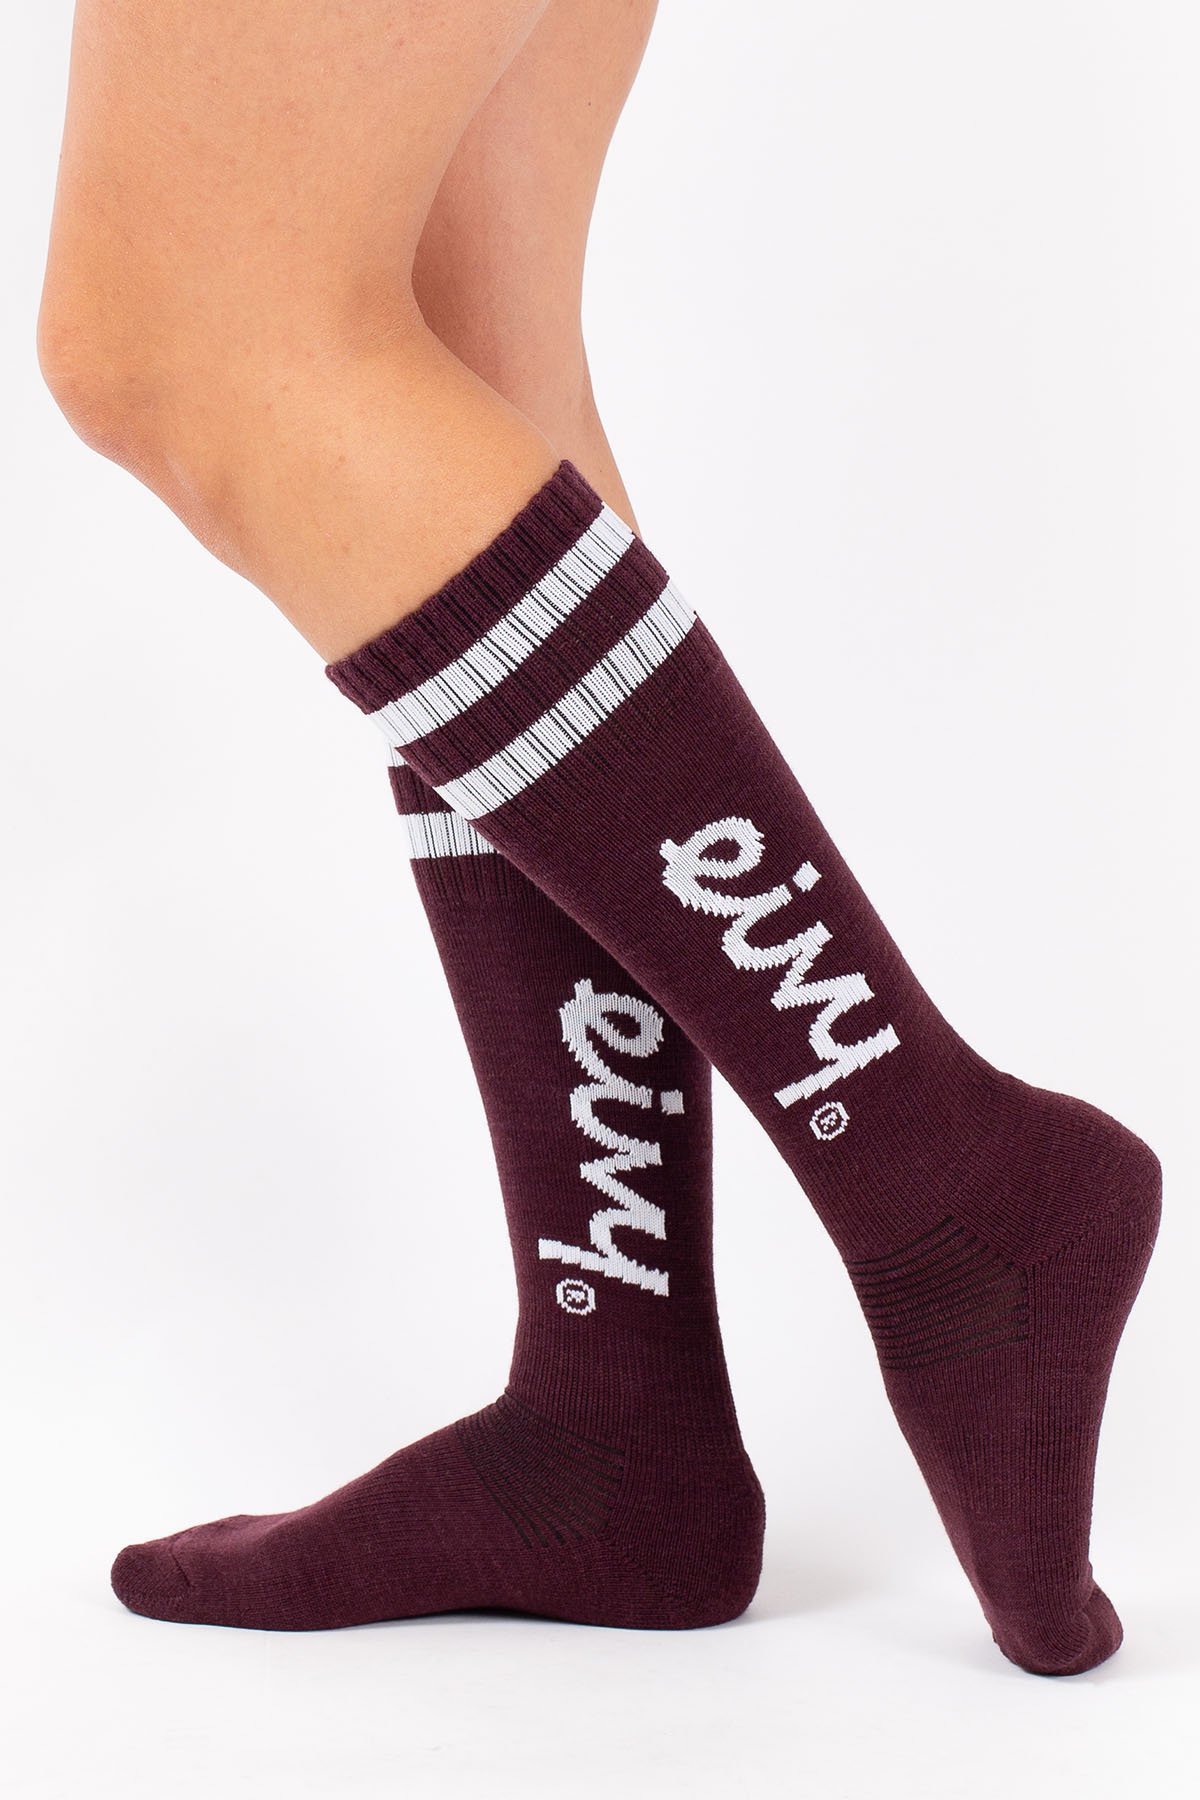 Cheerleader Wool Socks - Wine